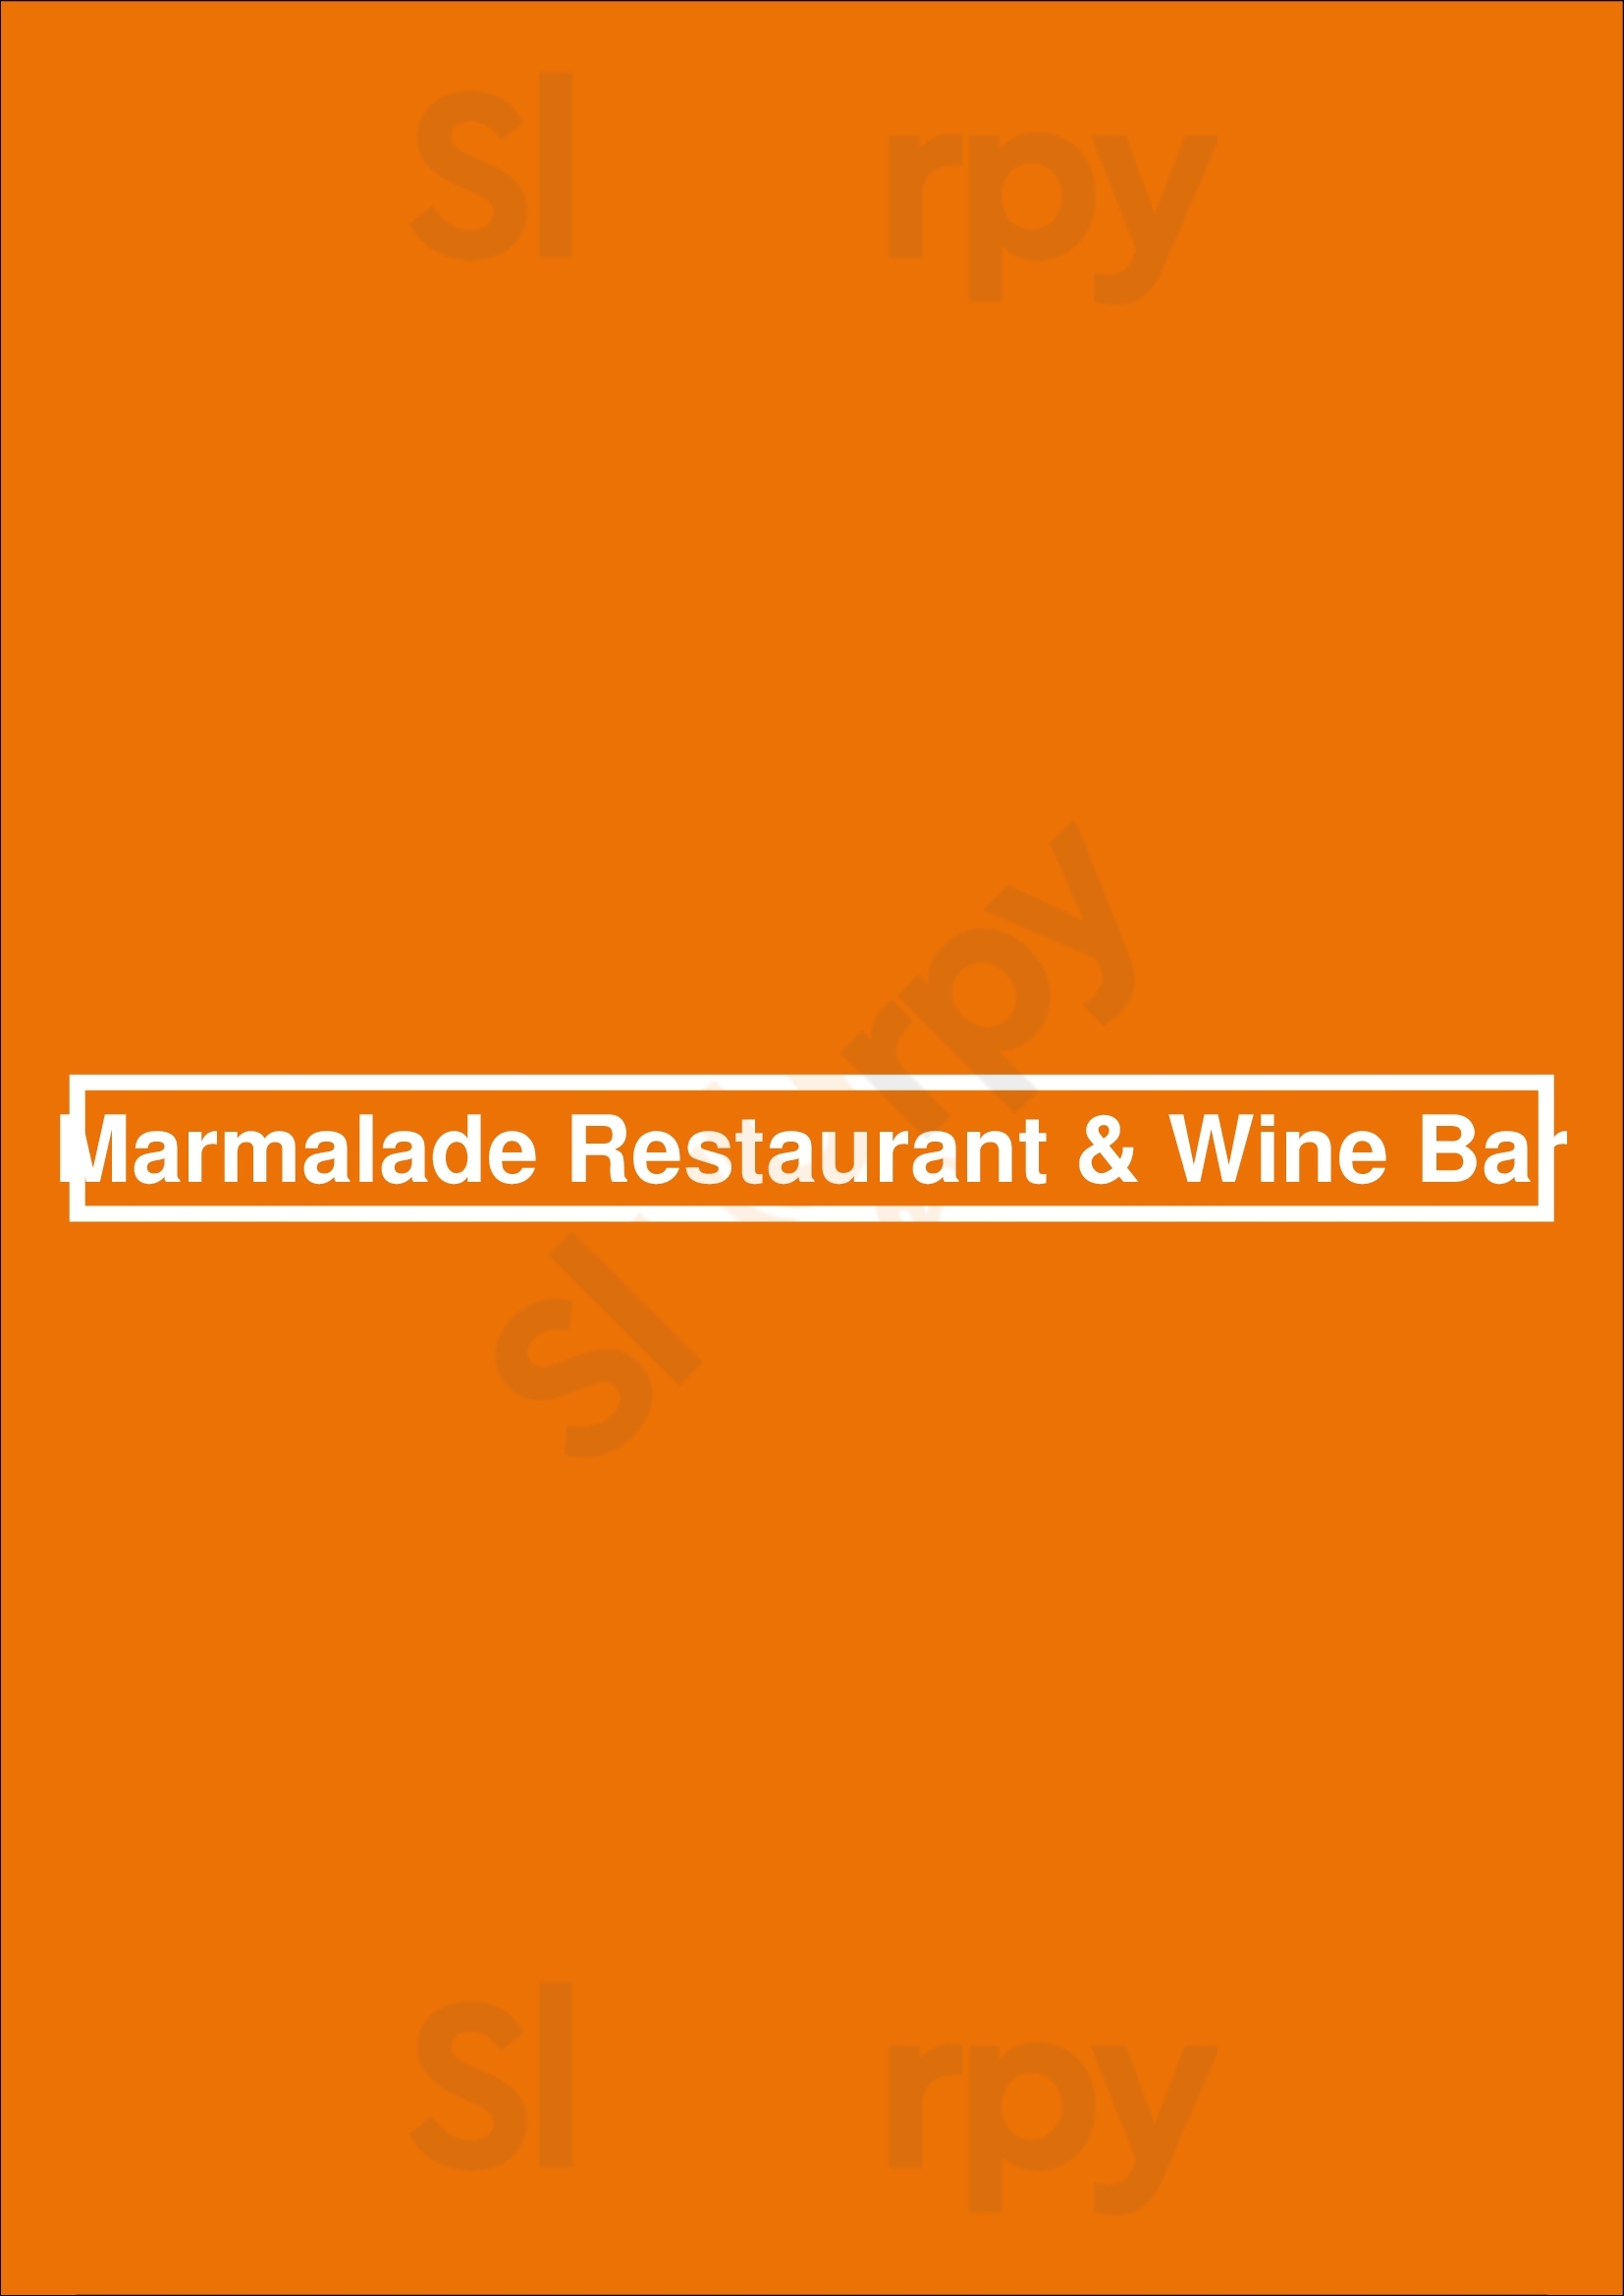 Marmalade Restaurant & Wine Bar San Juan Menu - 1